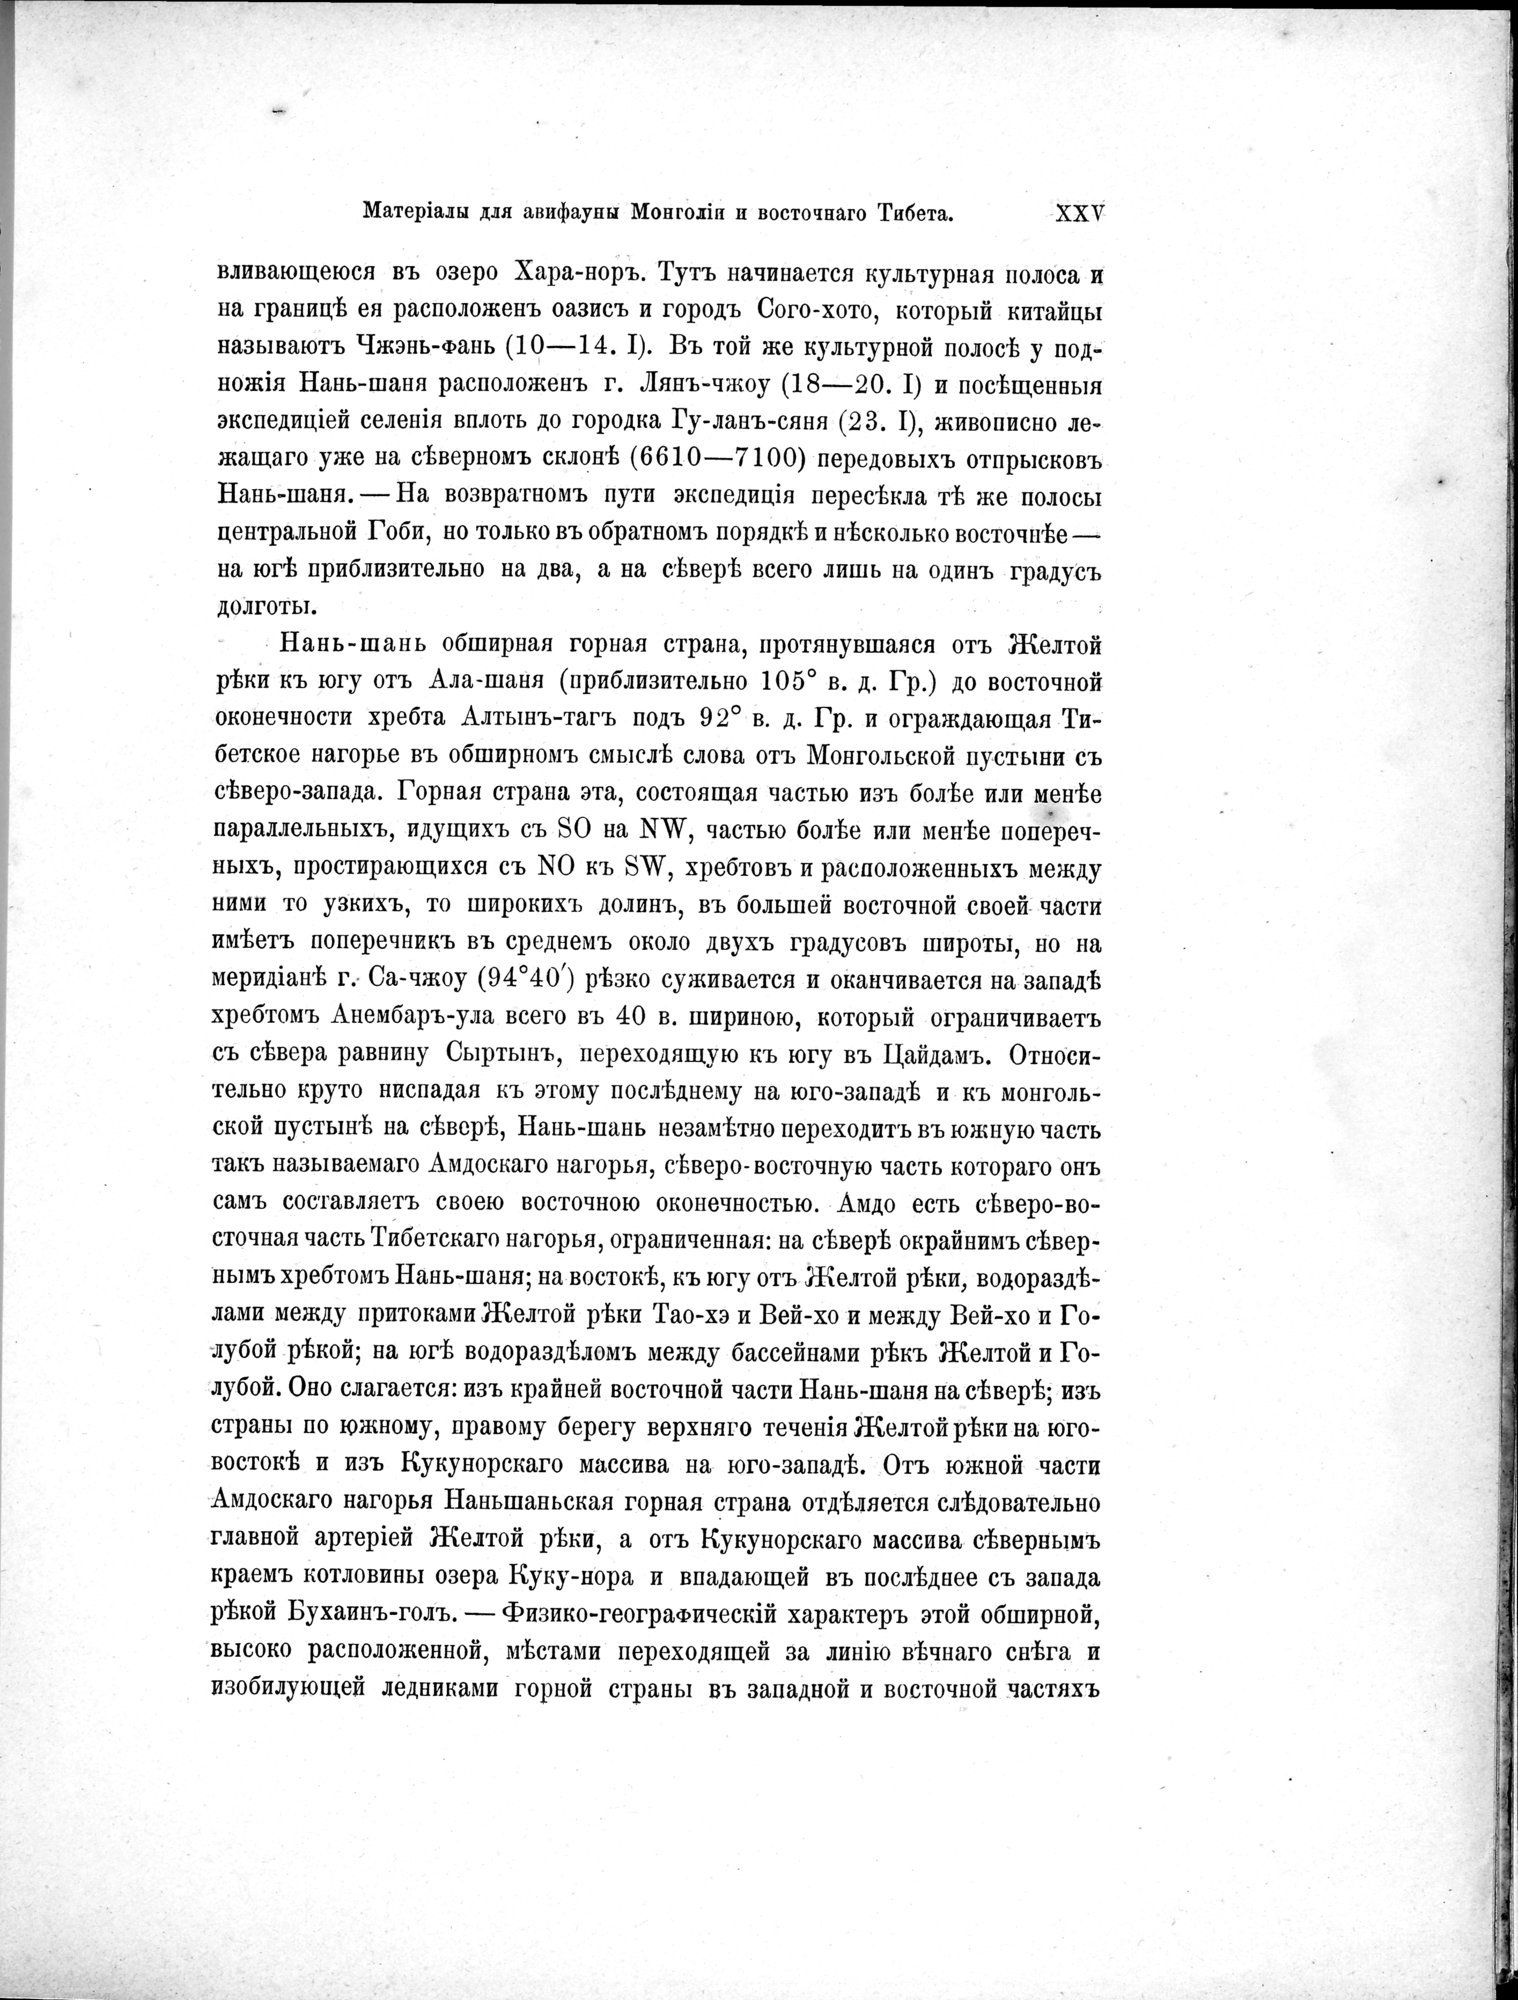 Mongoliia i Kam : vol.5 / Page 39 (Grayscale High Resolution Image)